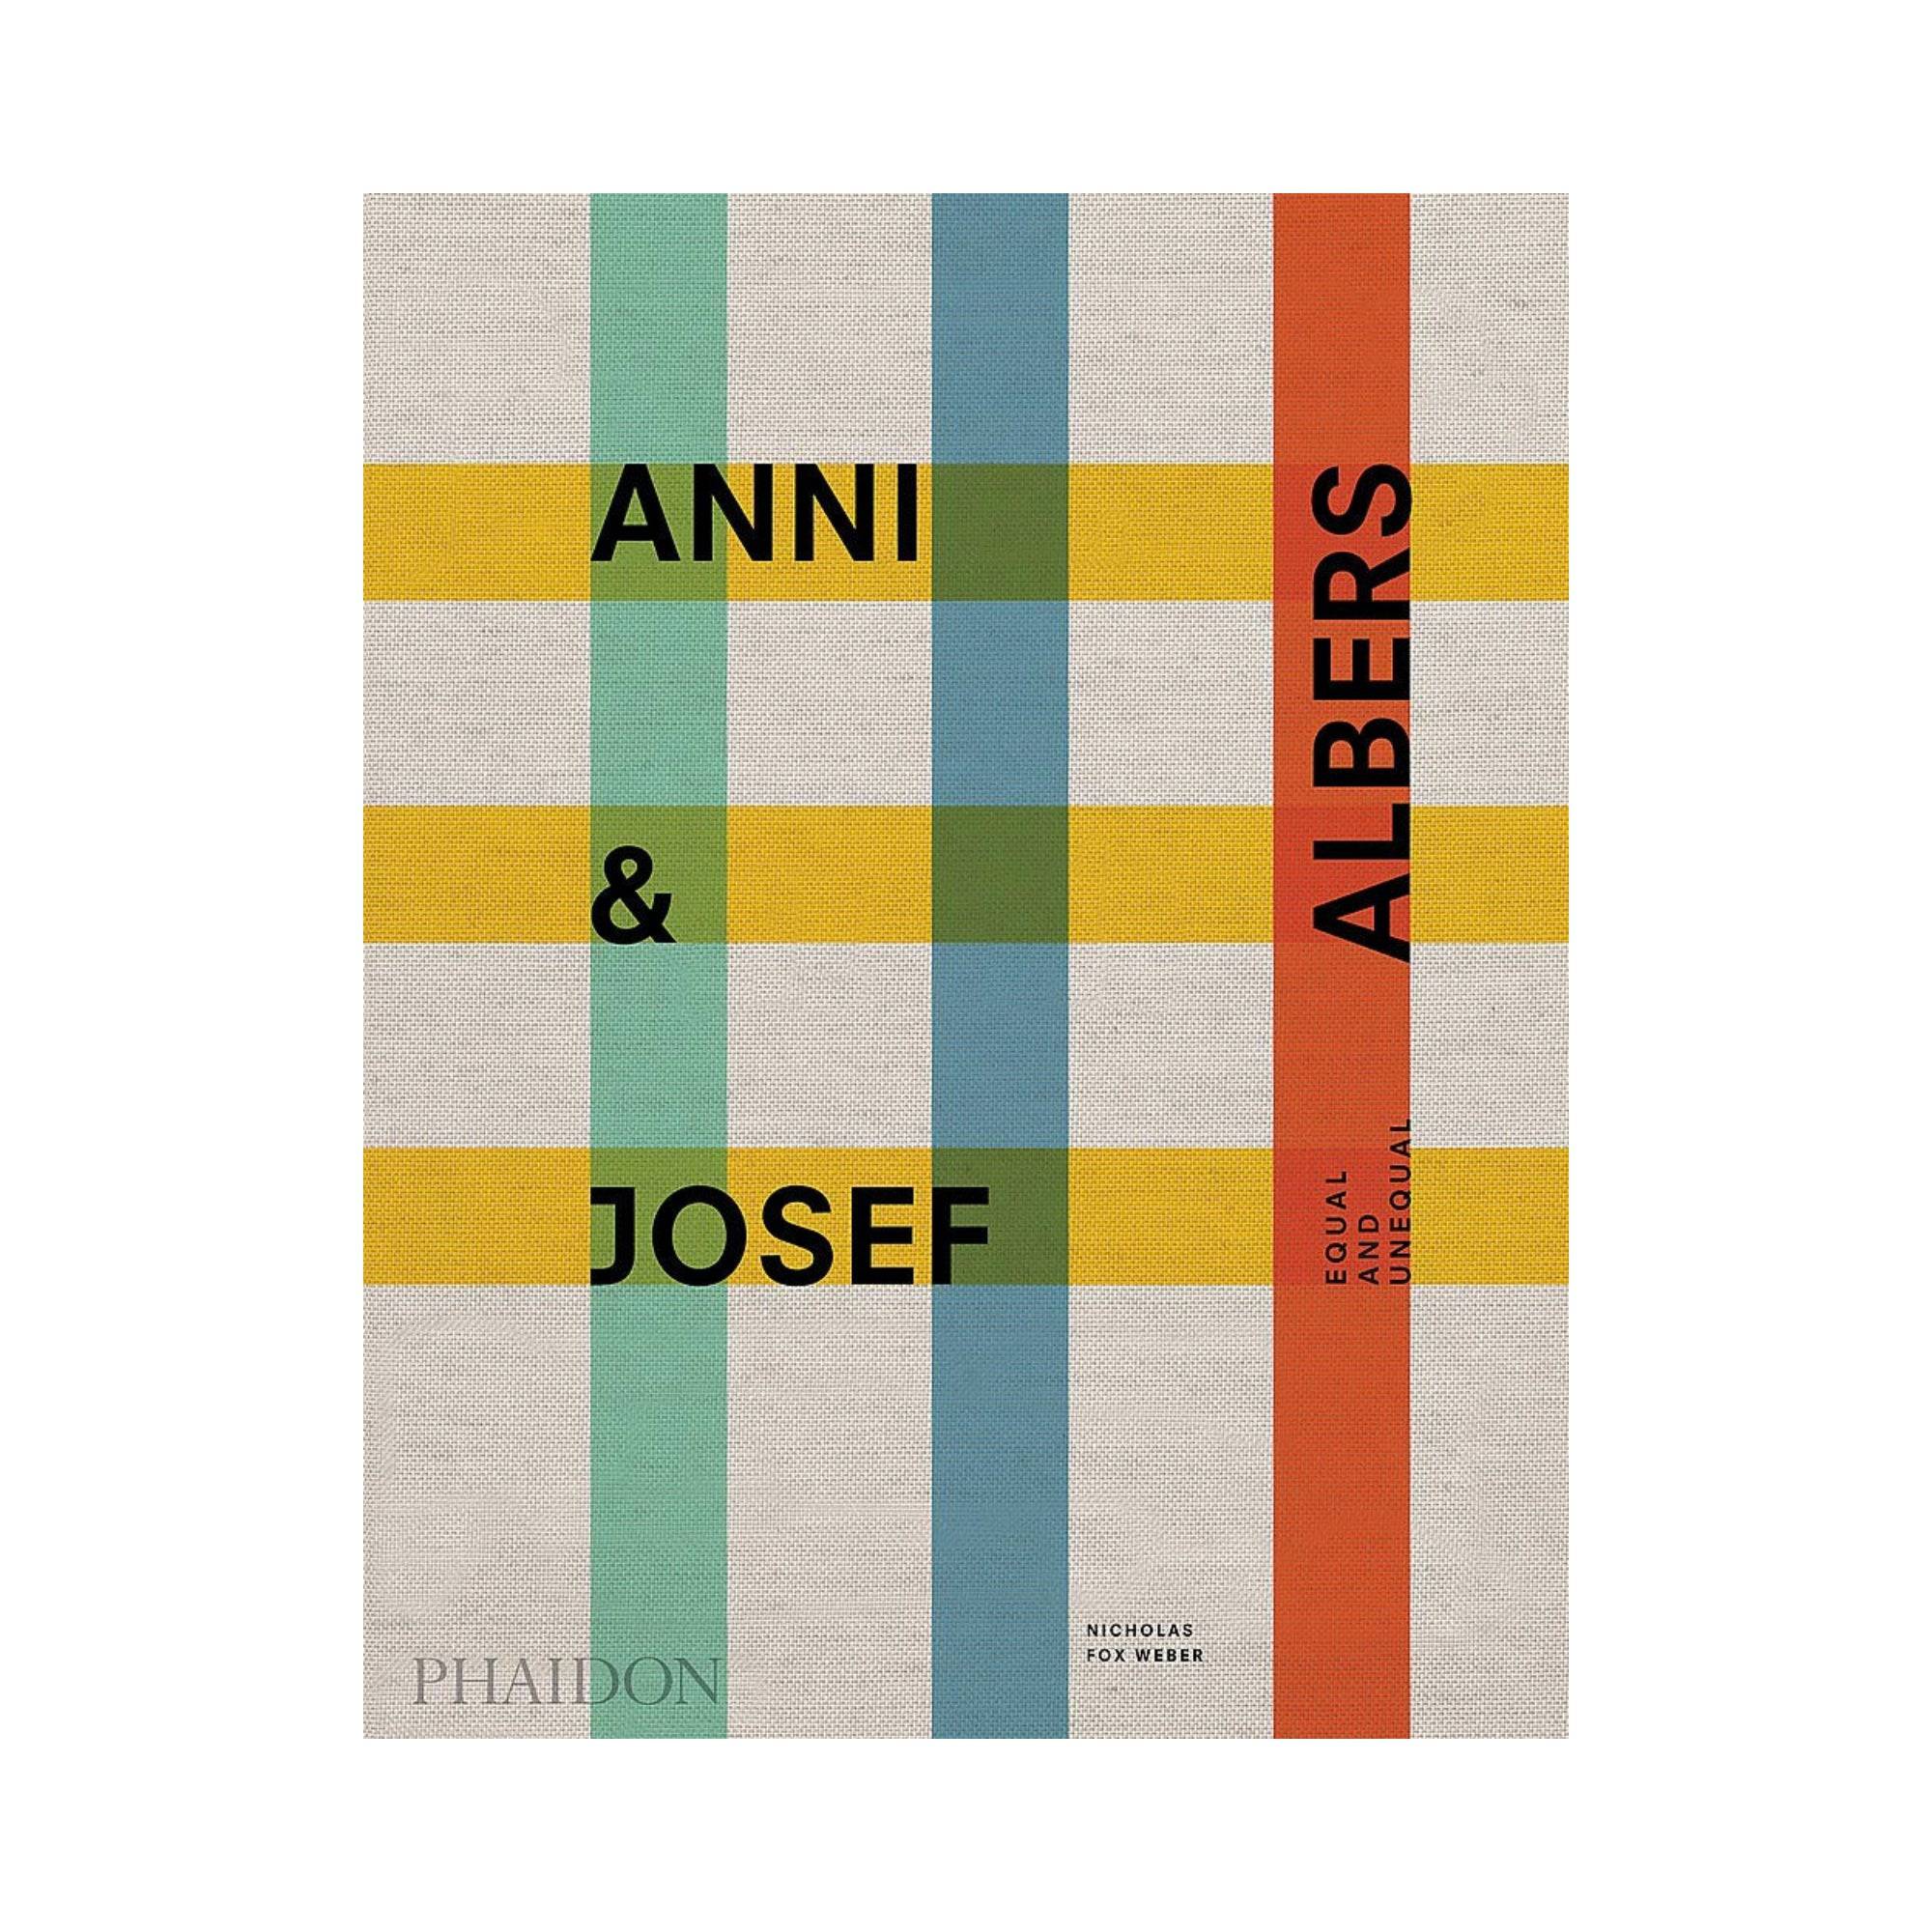 Anni & Josef Albers - THAT COOL LIVING